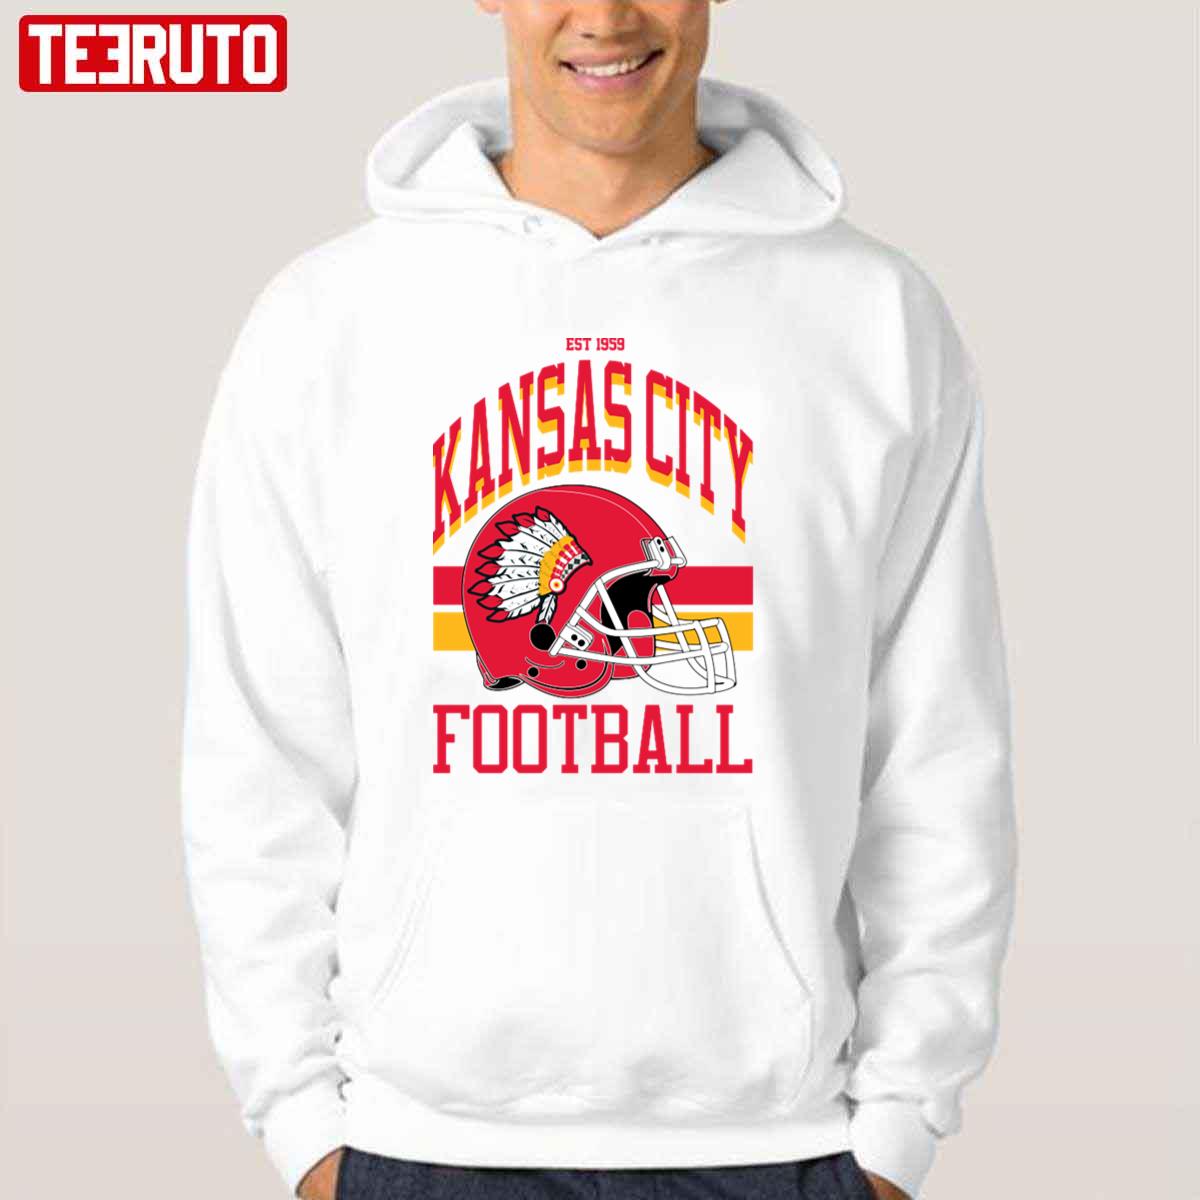 Kansas City Football Red Jersey Unisex T-Shirt - Teeruto